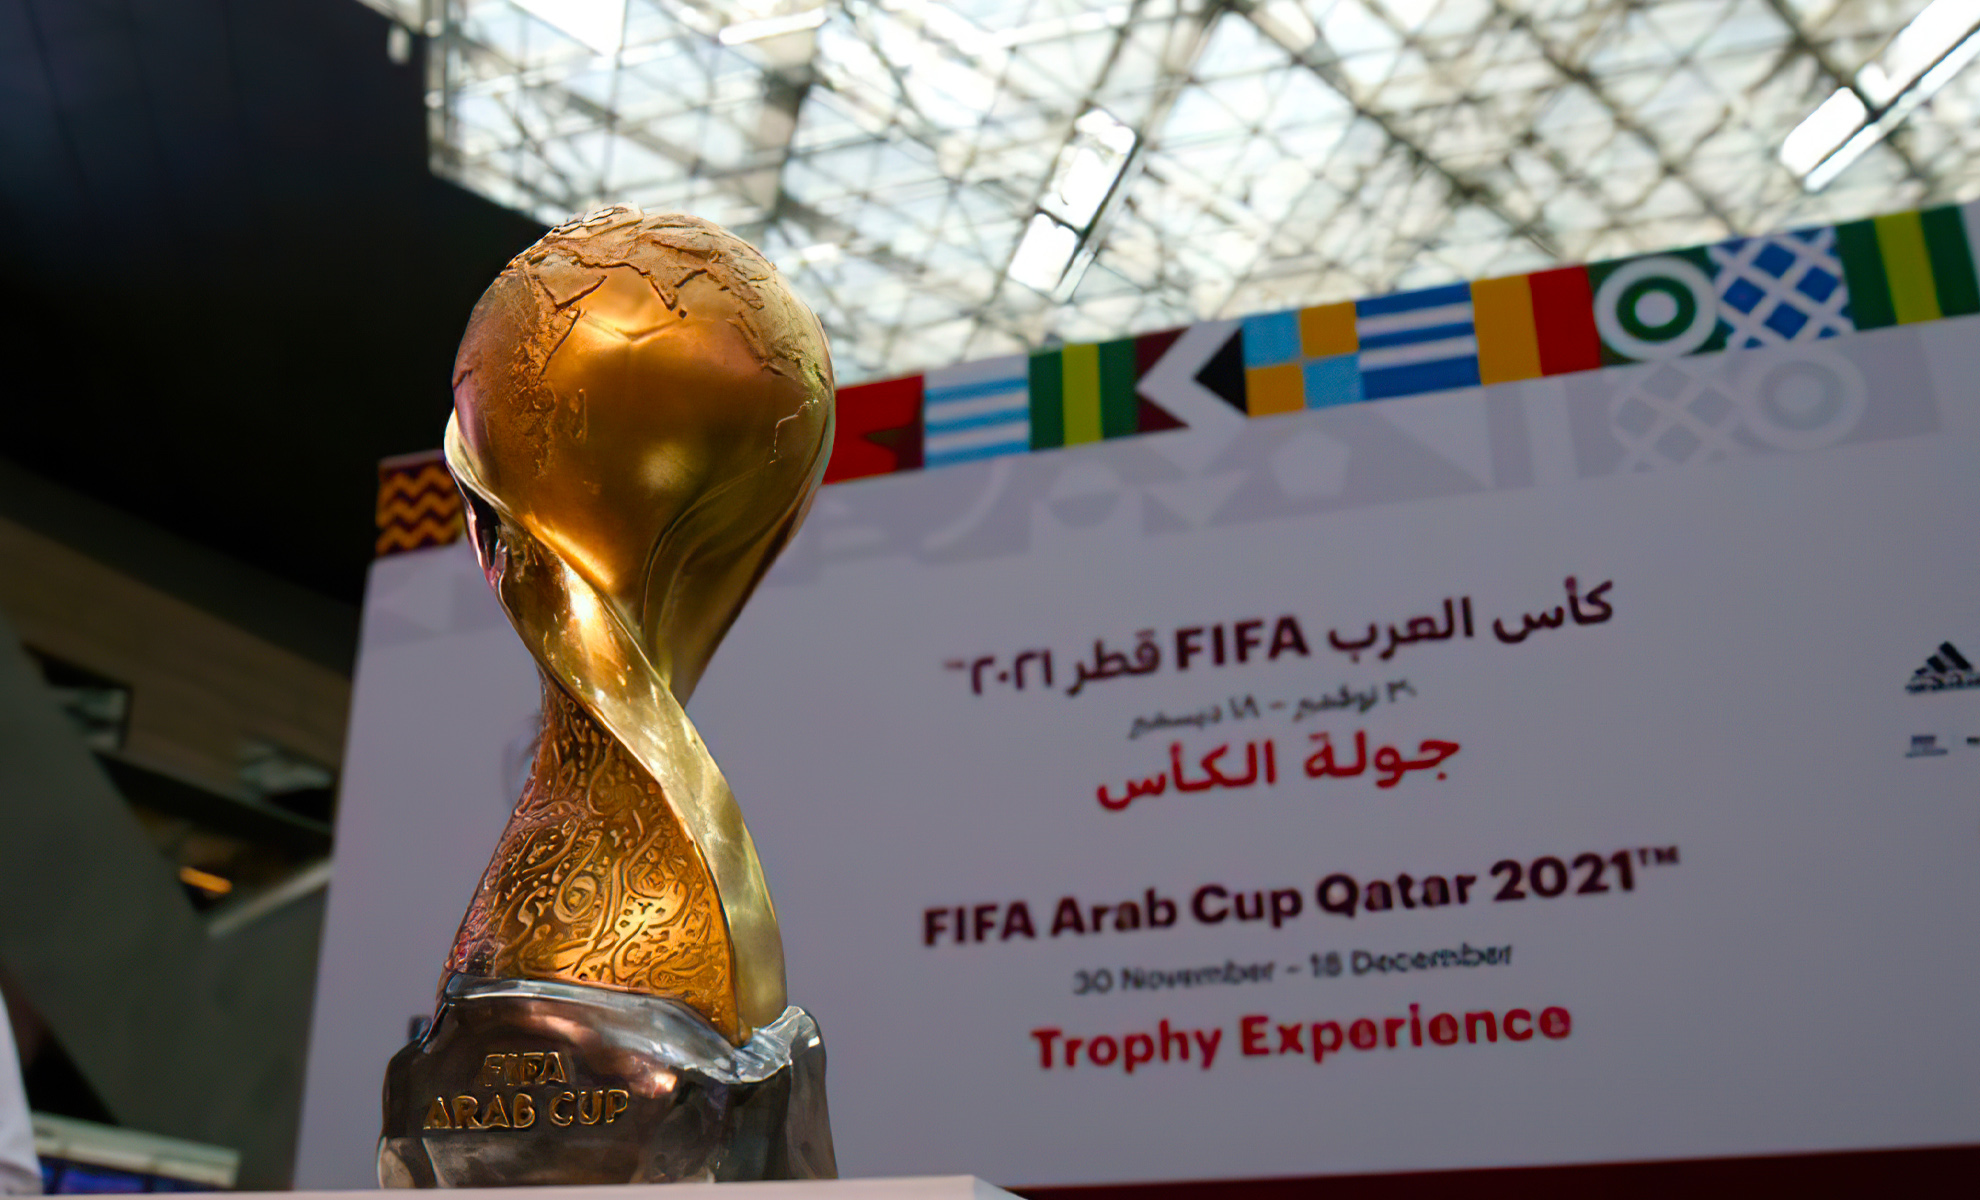 Qui va soulever la Coupe Arabe ? La Tunisie ? L'Algérie ?